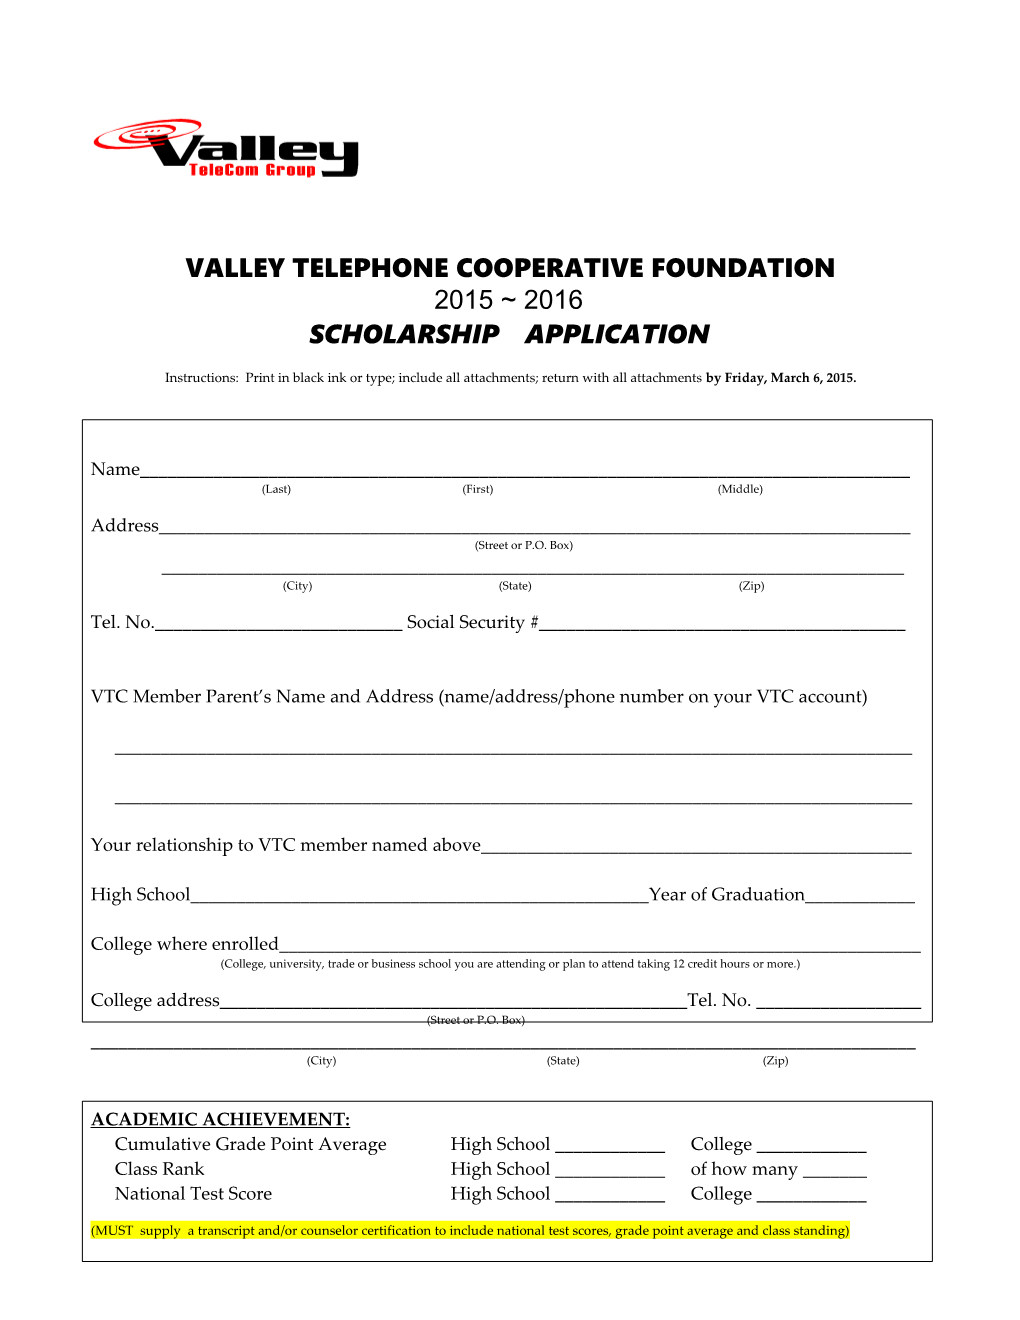 Valley Telephone Cooperative Foundation